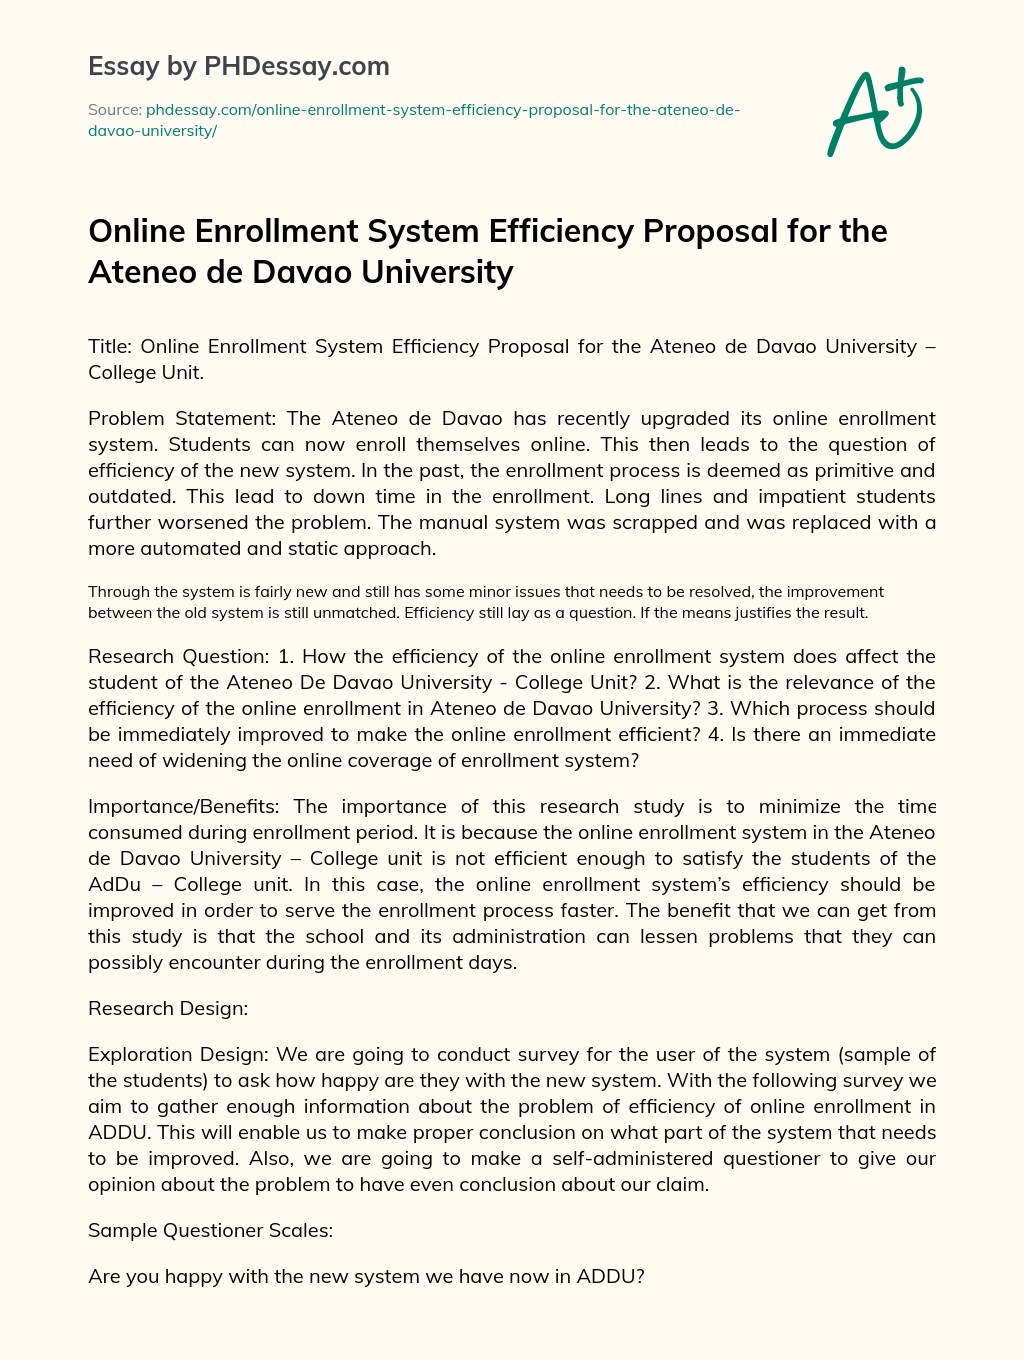 Online Enrollment System Efficiency Proposal for the Ateneo de Davao University essay